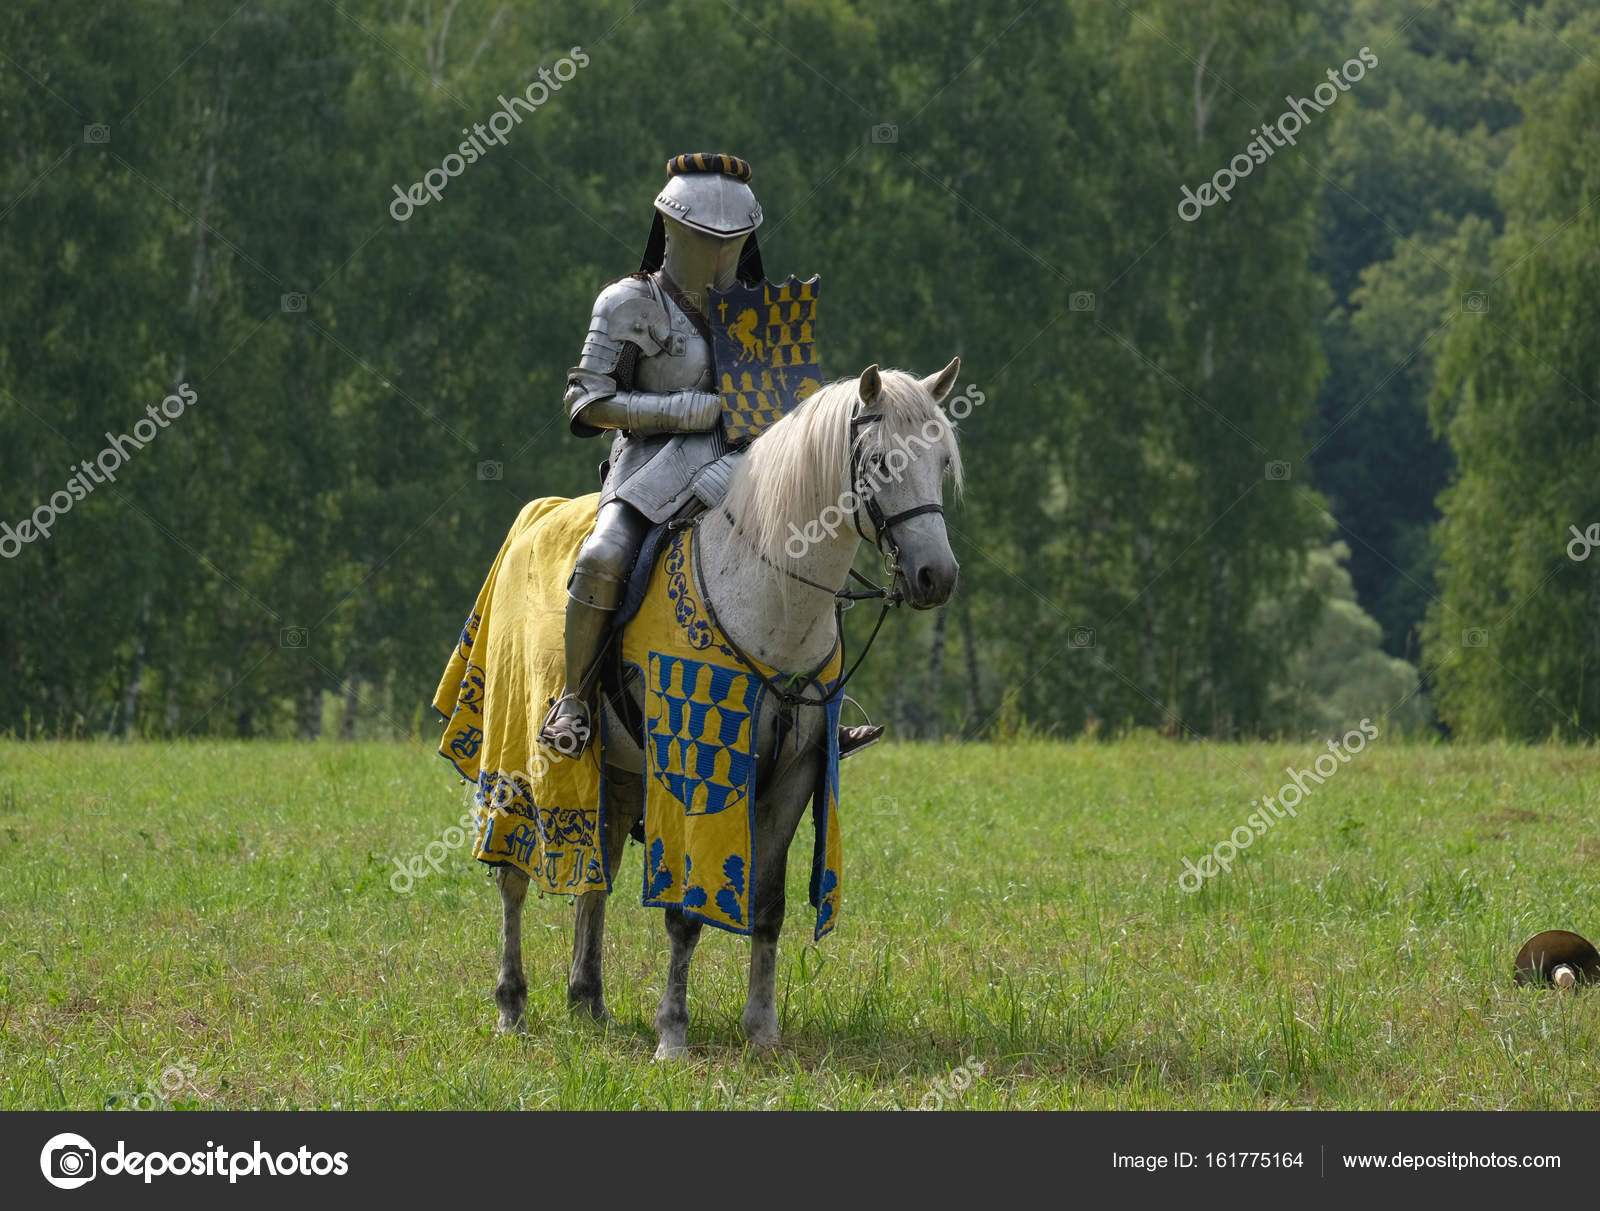 Medieval knight in armor on horseback – Stock Editorial Photo